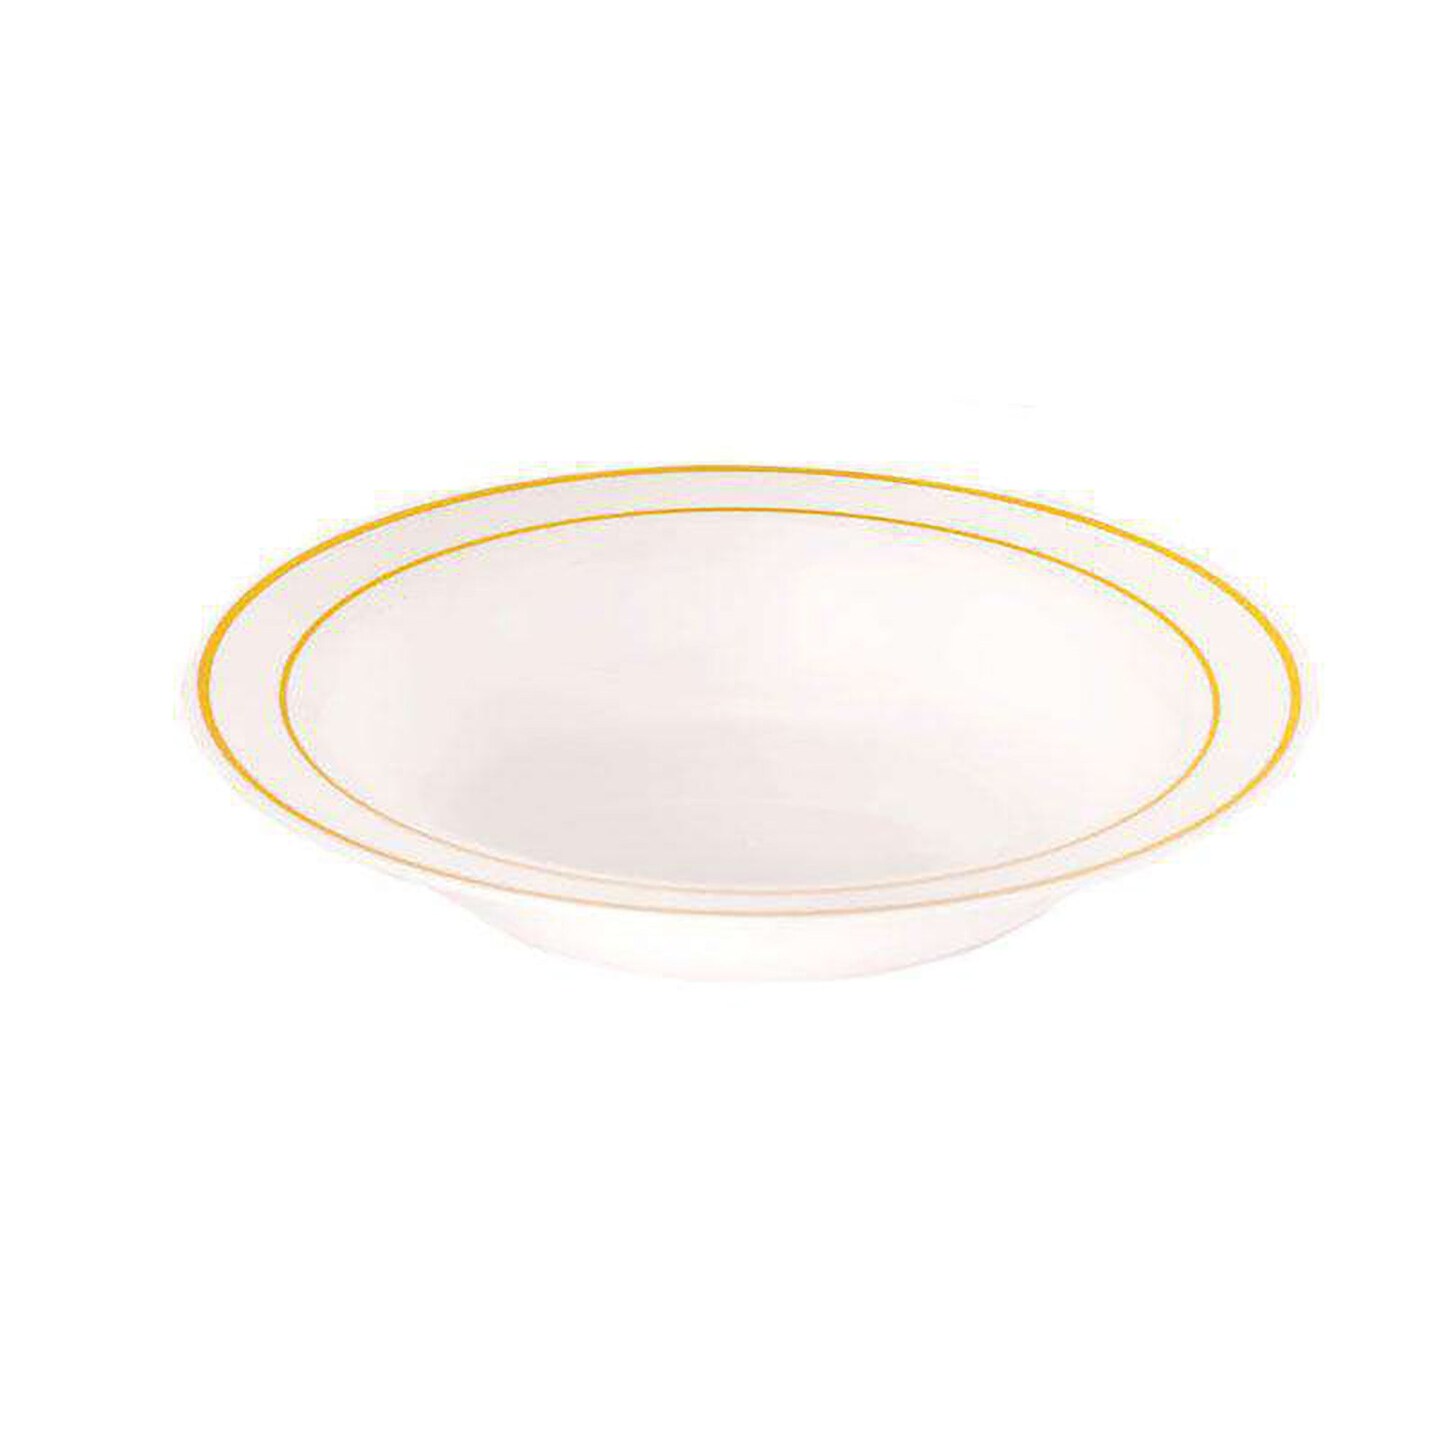 White with Gold Edge Rim Plastic Soup Bowls - 12 Ounce (120 Bowls)